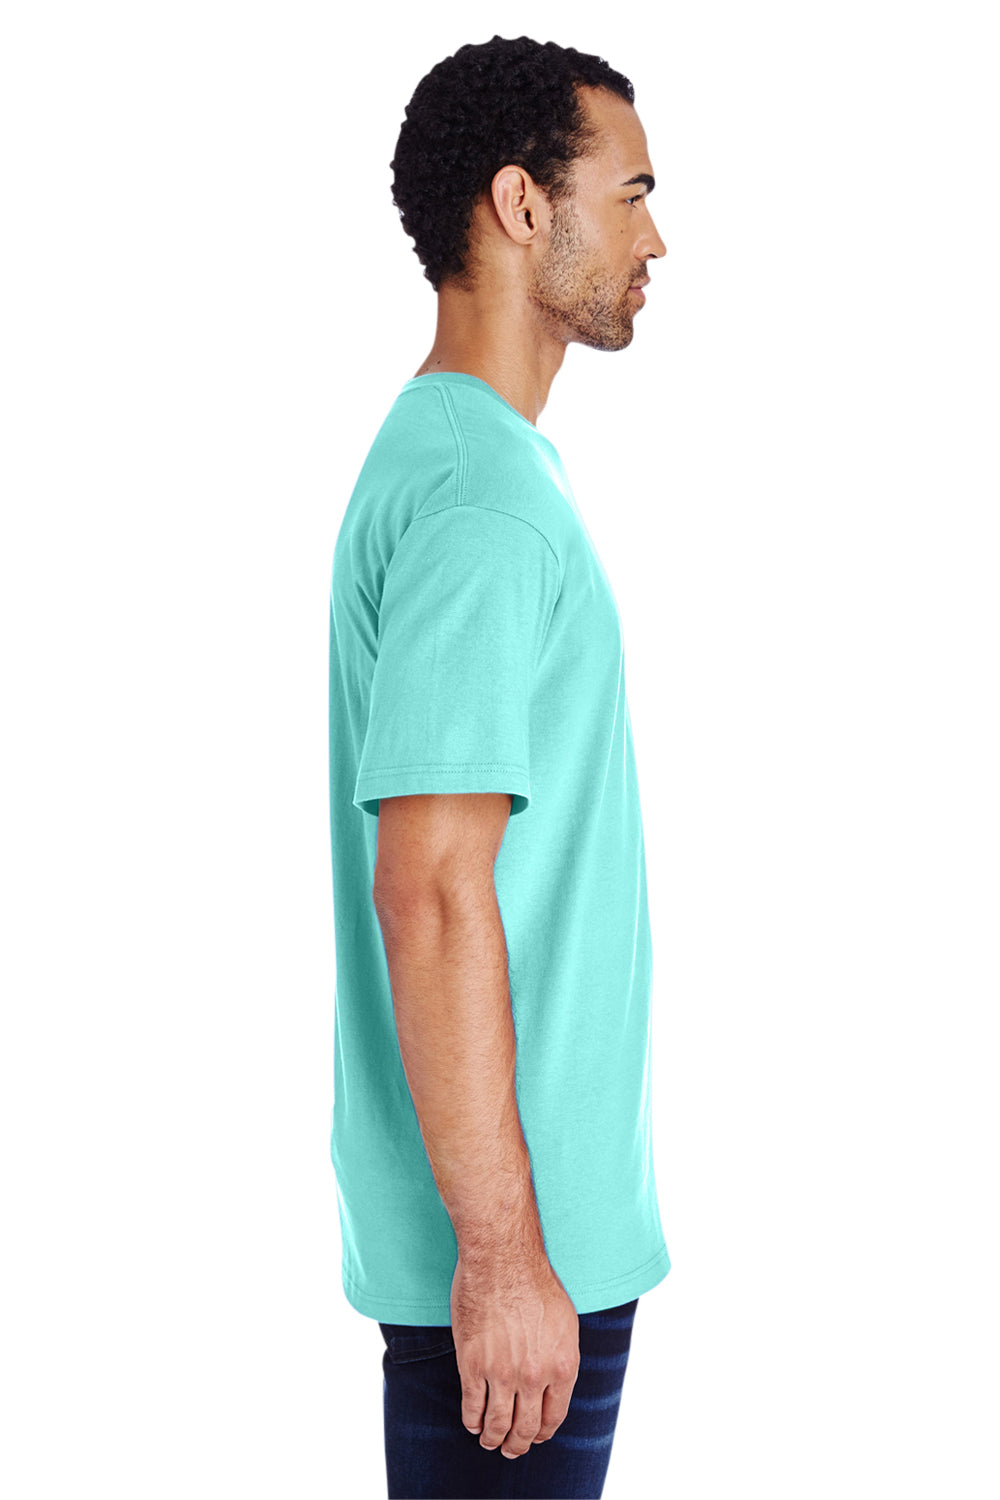 Gildan H000 Mens Hammer Short Sleeve Crewneck T-Shirt Chalky Mint Blue Side